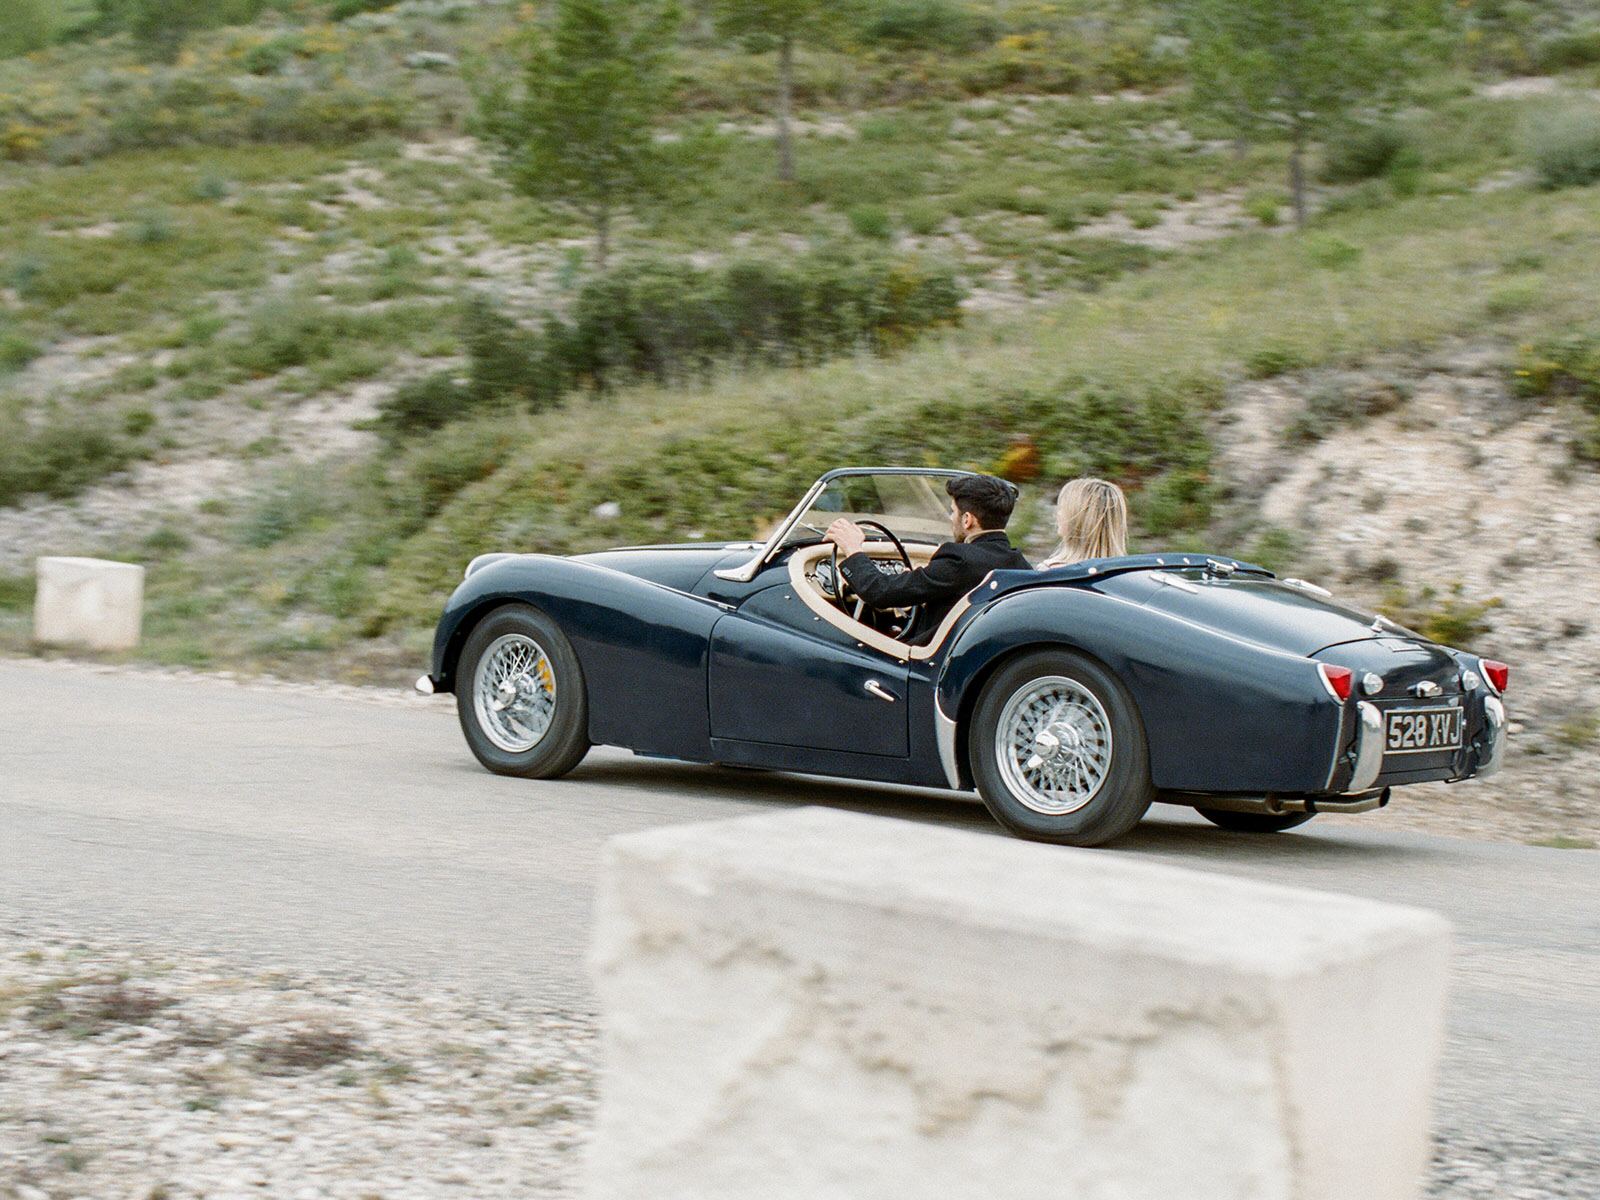 A view of the Provence Classics 1959 Triumph TR3A